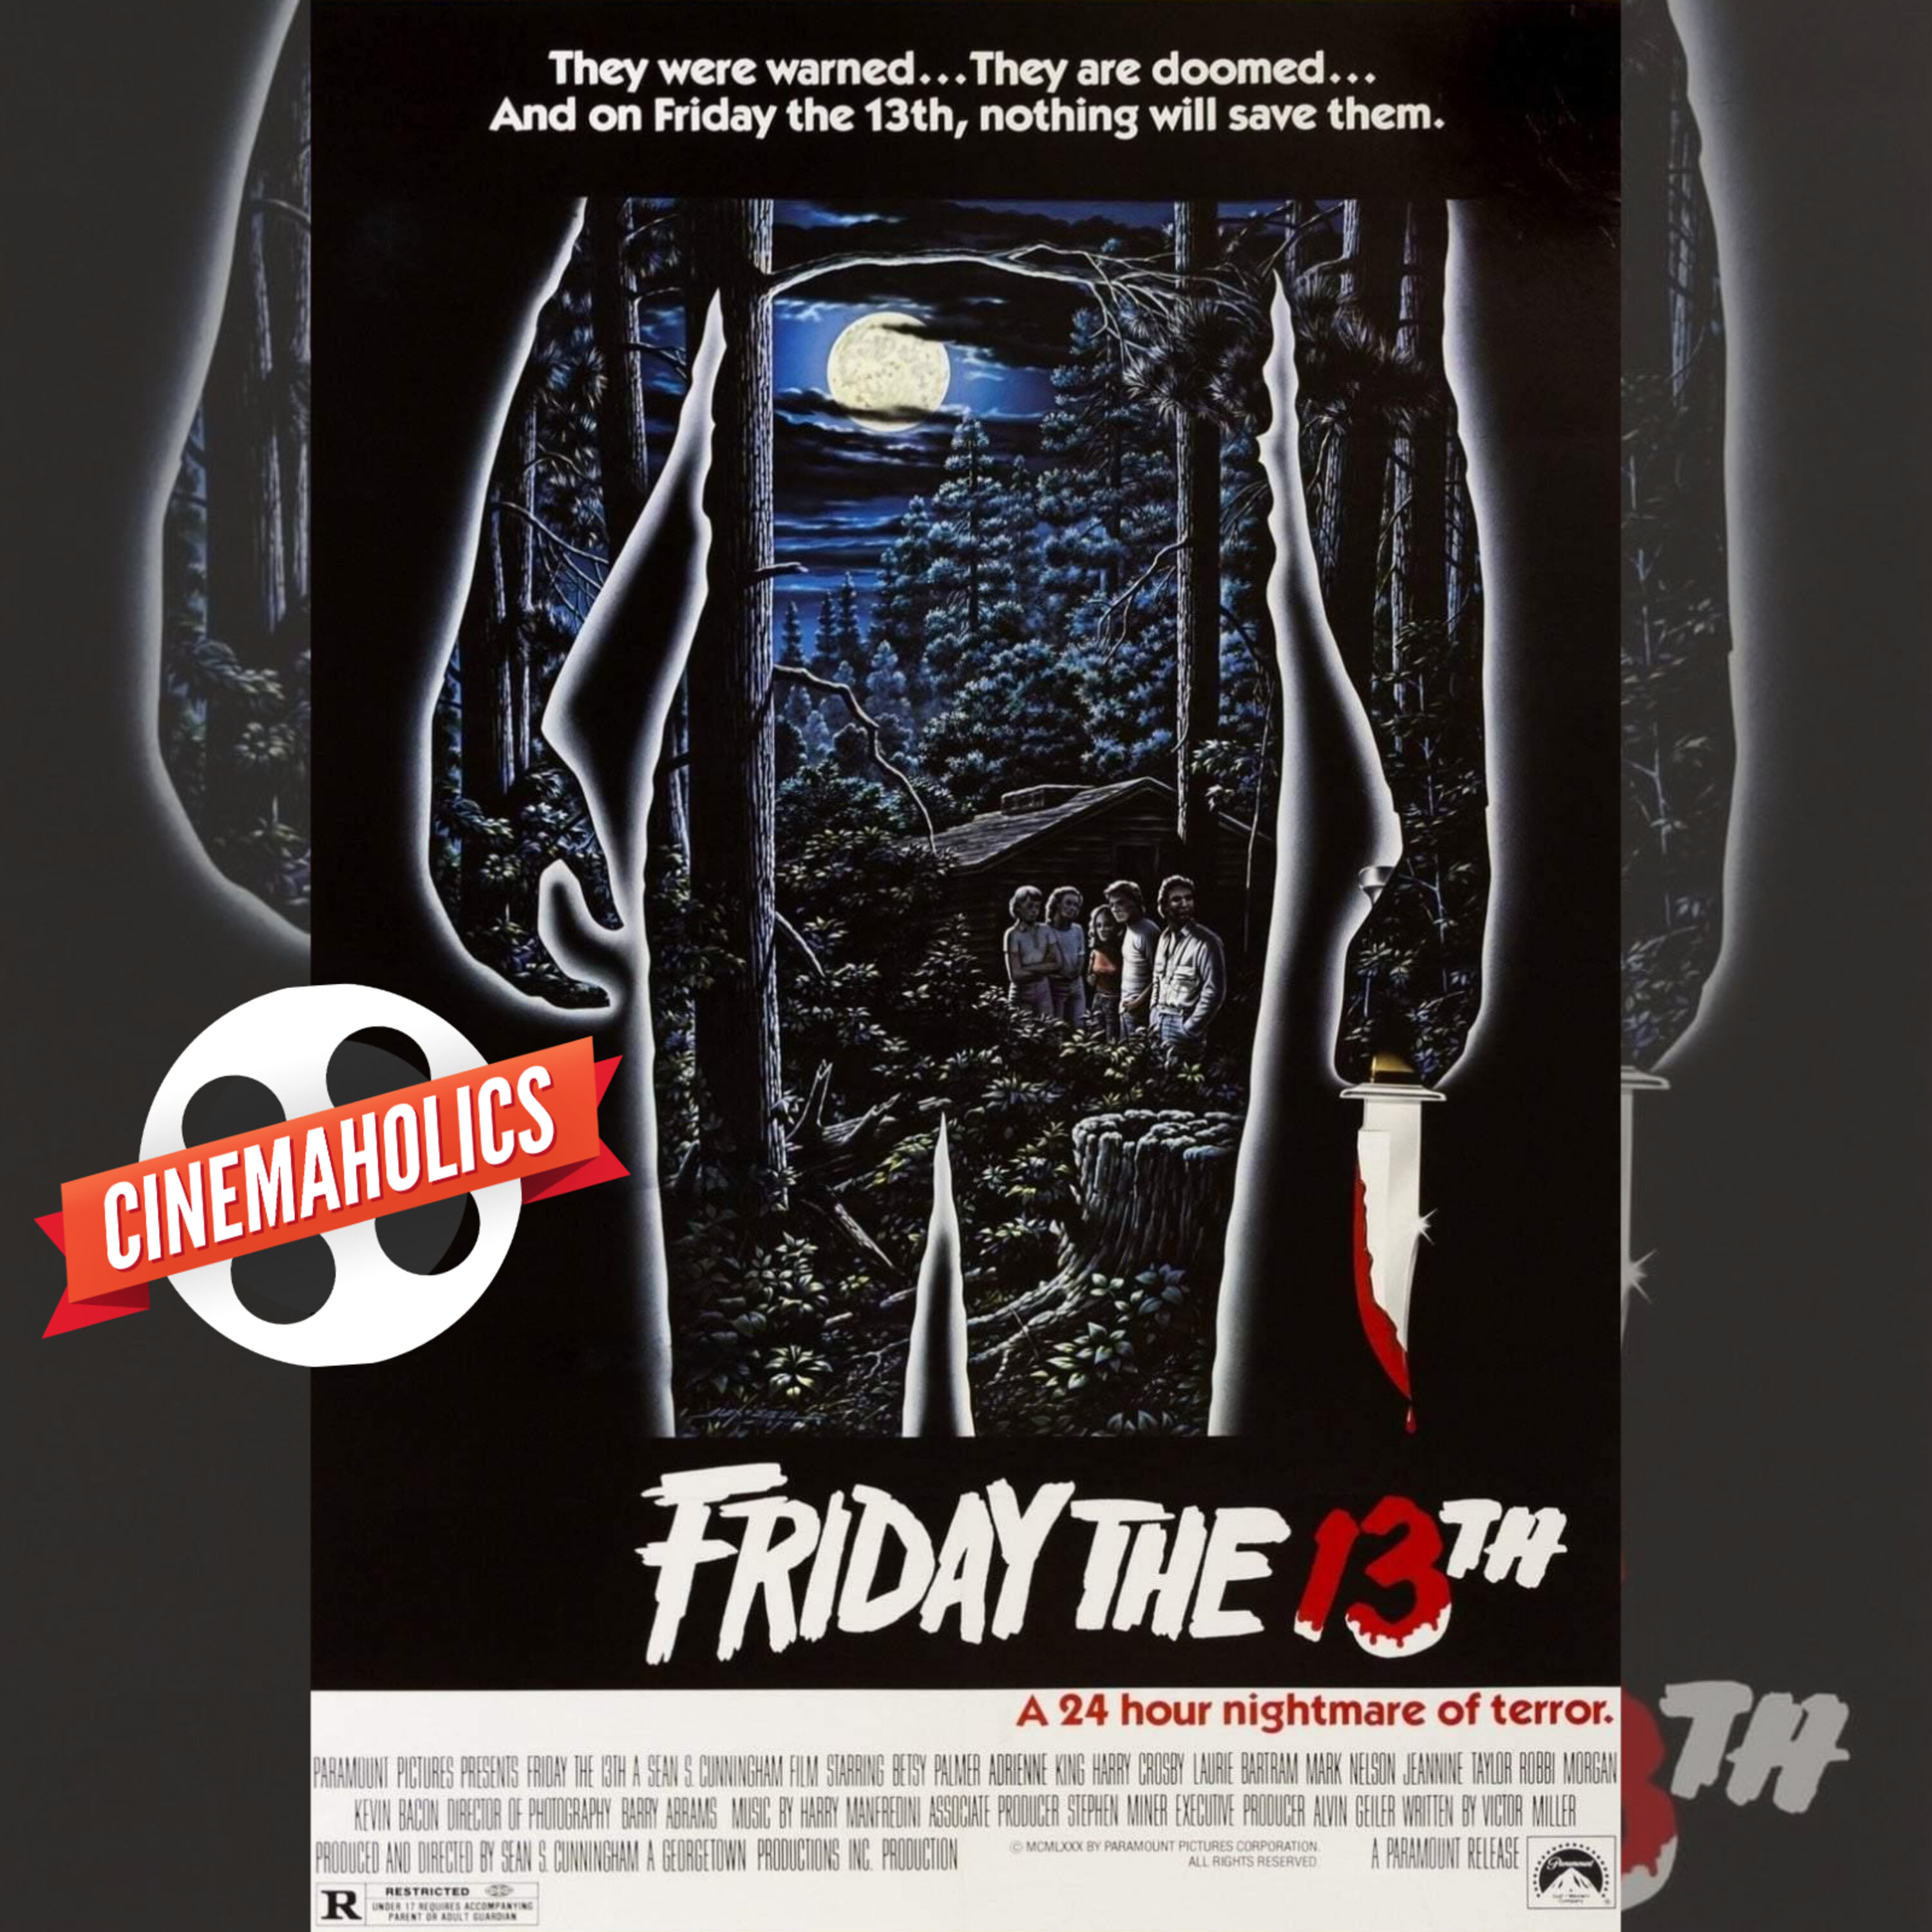 Friday the 13th (1980), Bride of Frankenstein (1935), Re-Animator (1985)